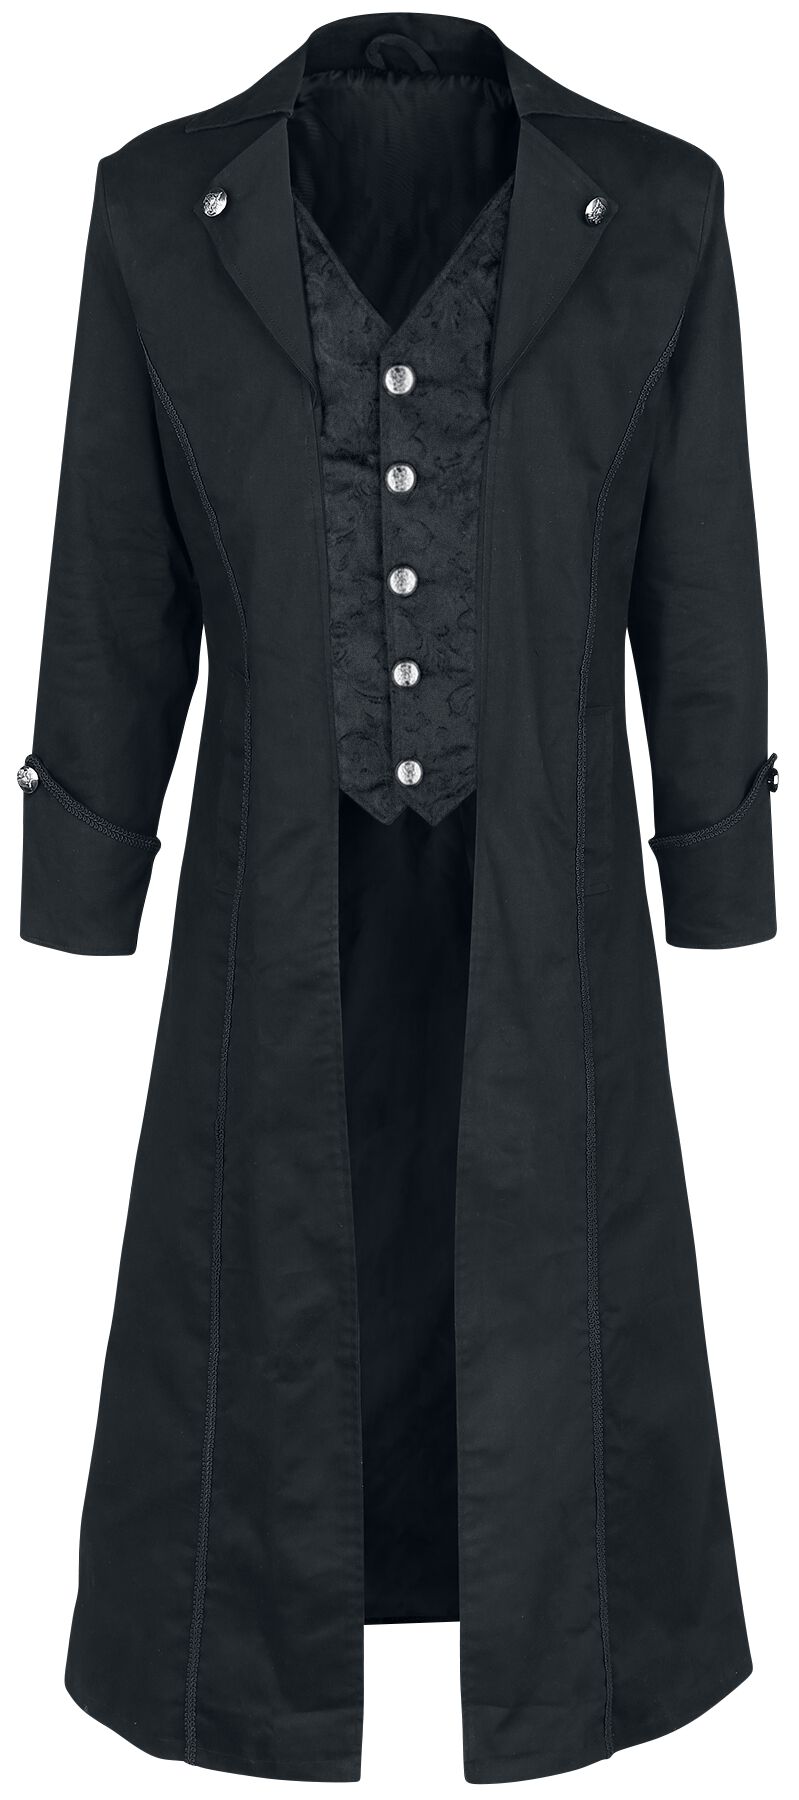 altana industries - gothic militÃ¤rmantel - dark brocade coat - m bis xxl - fÃ¼r mÃ¤nner - grÃ¶ÃŸe m - schwarz uomo